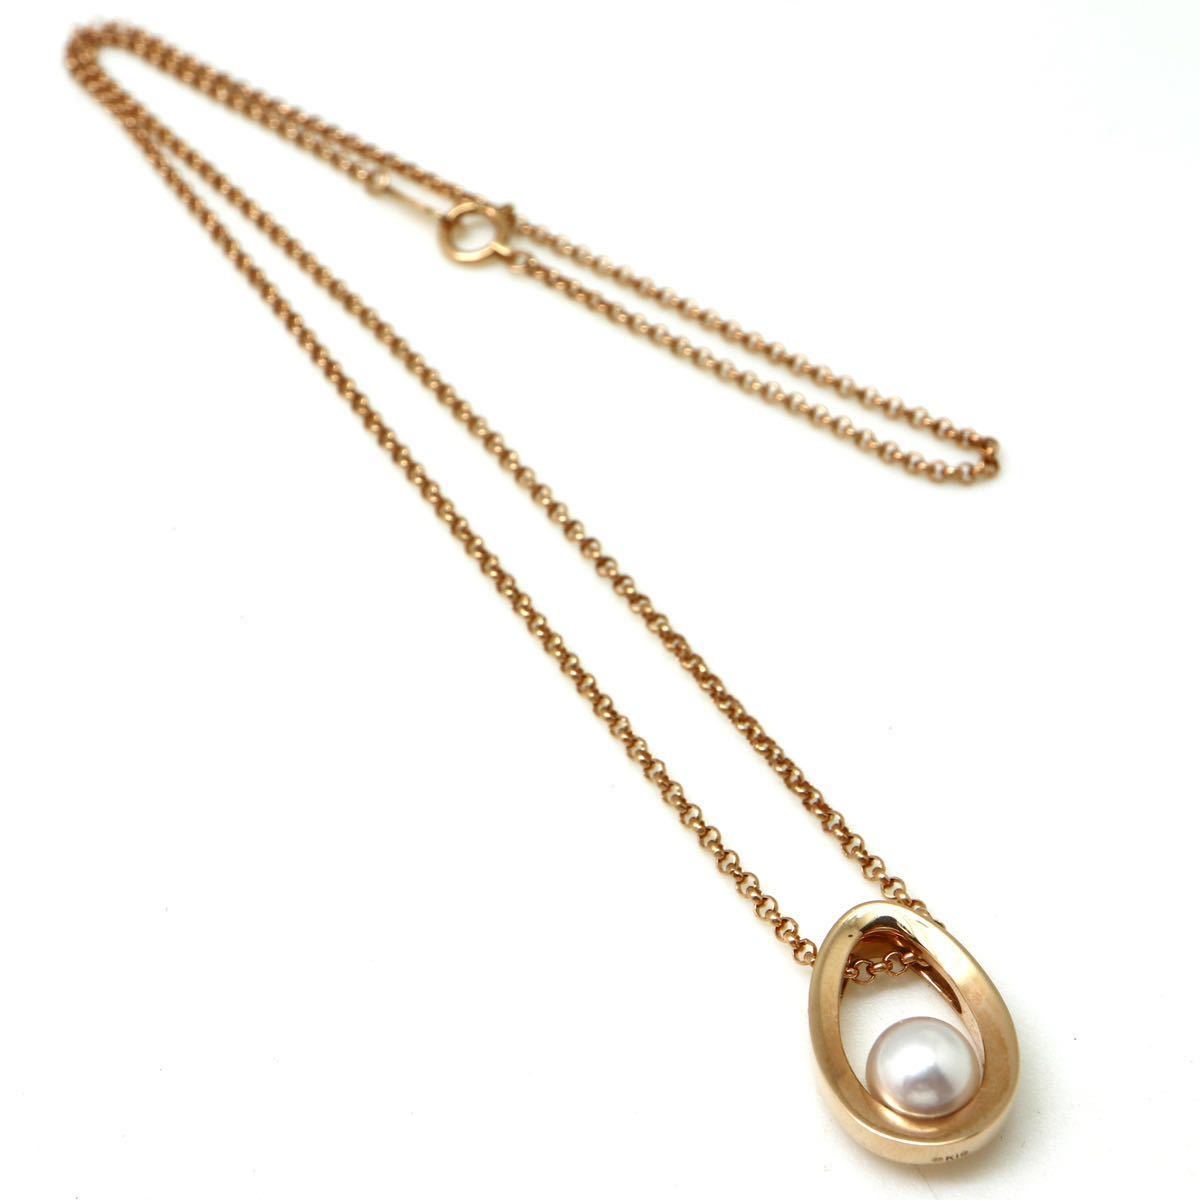 MIKIMOTO(ミキモト)!!《K18 アコヤ本真珠ネックレス》N ◎ 6.5mm珠 7.0g 42.5cm pearl necklace ジュエリー jewelry EE7/-_画像6